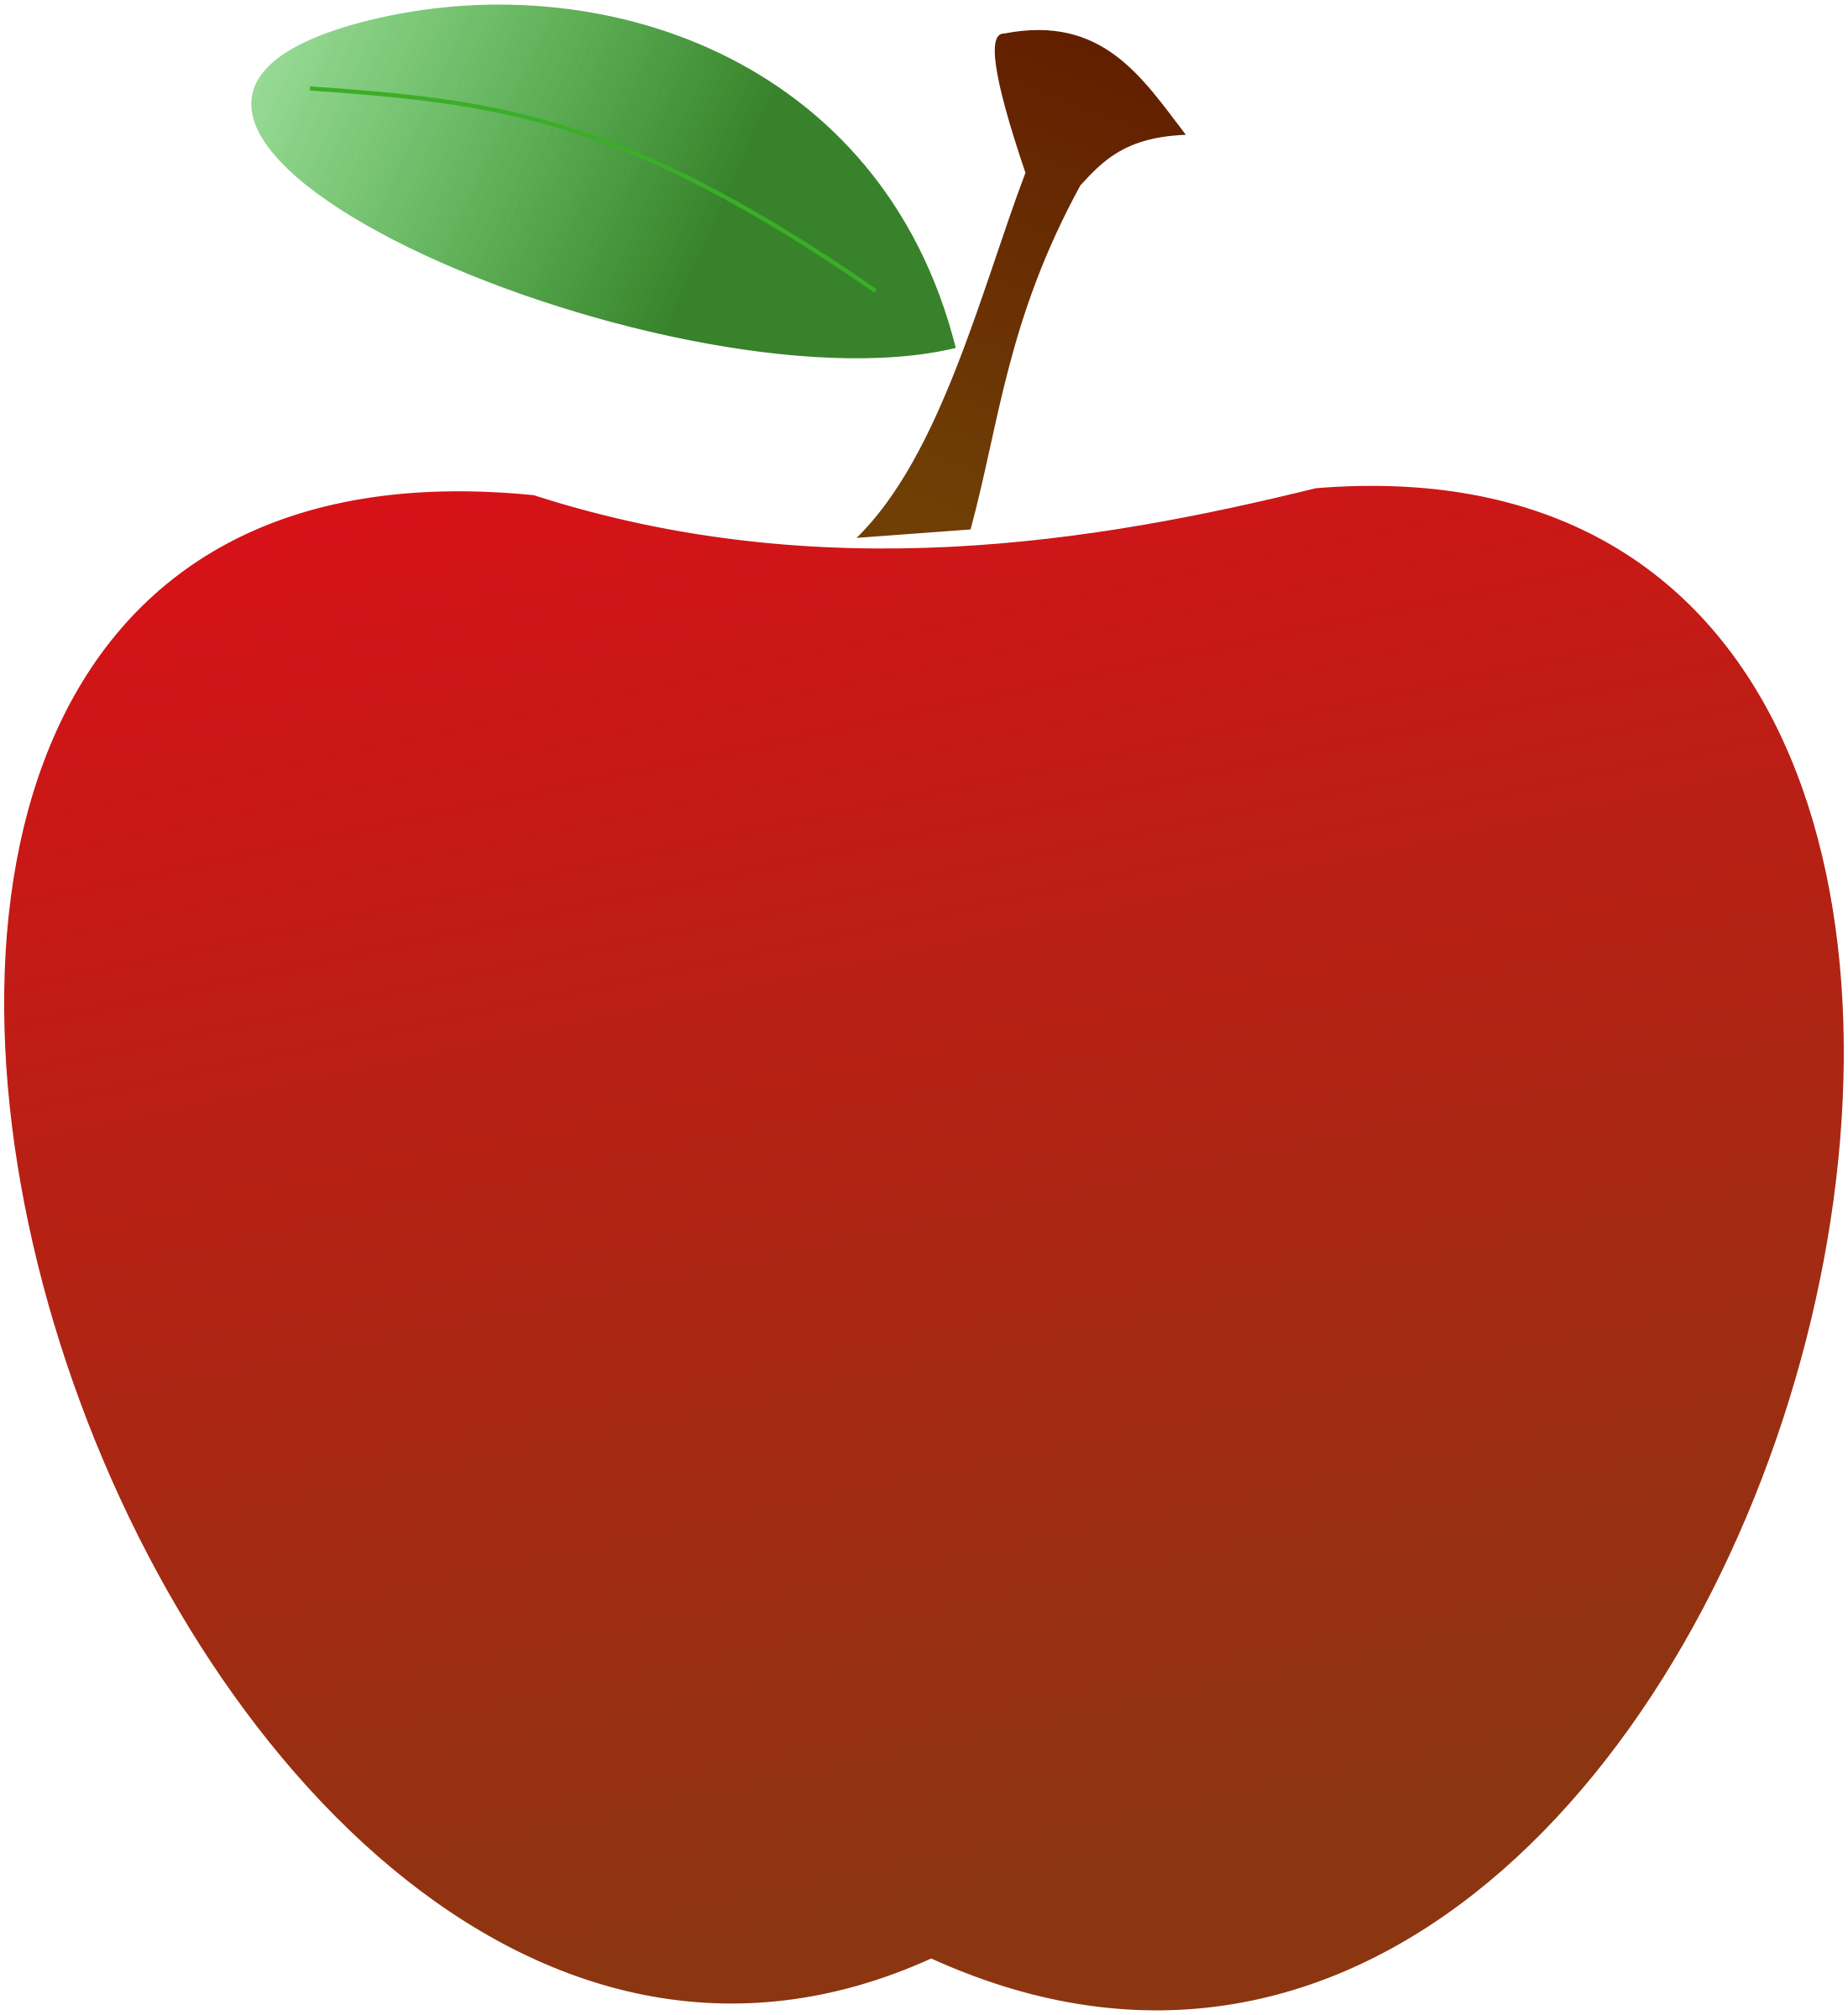 ... Red apple - vector illust